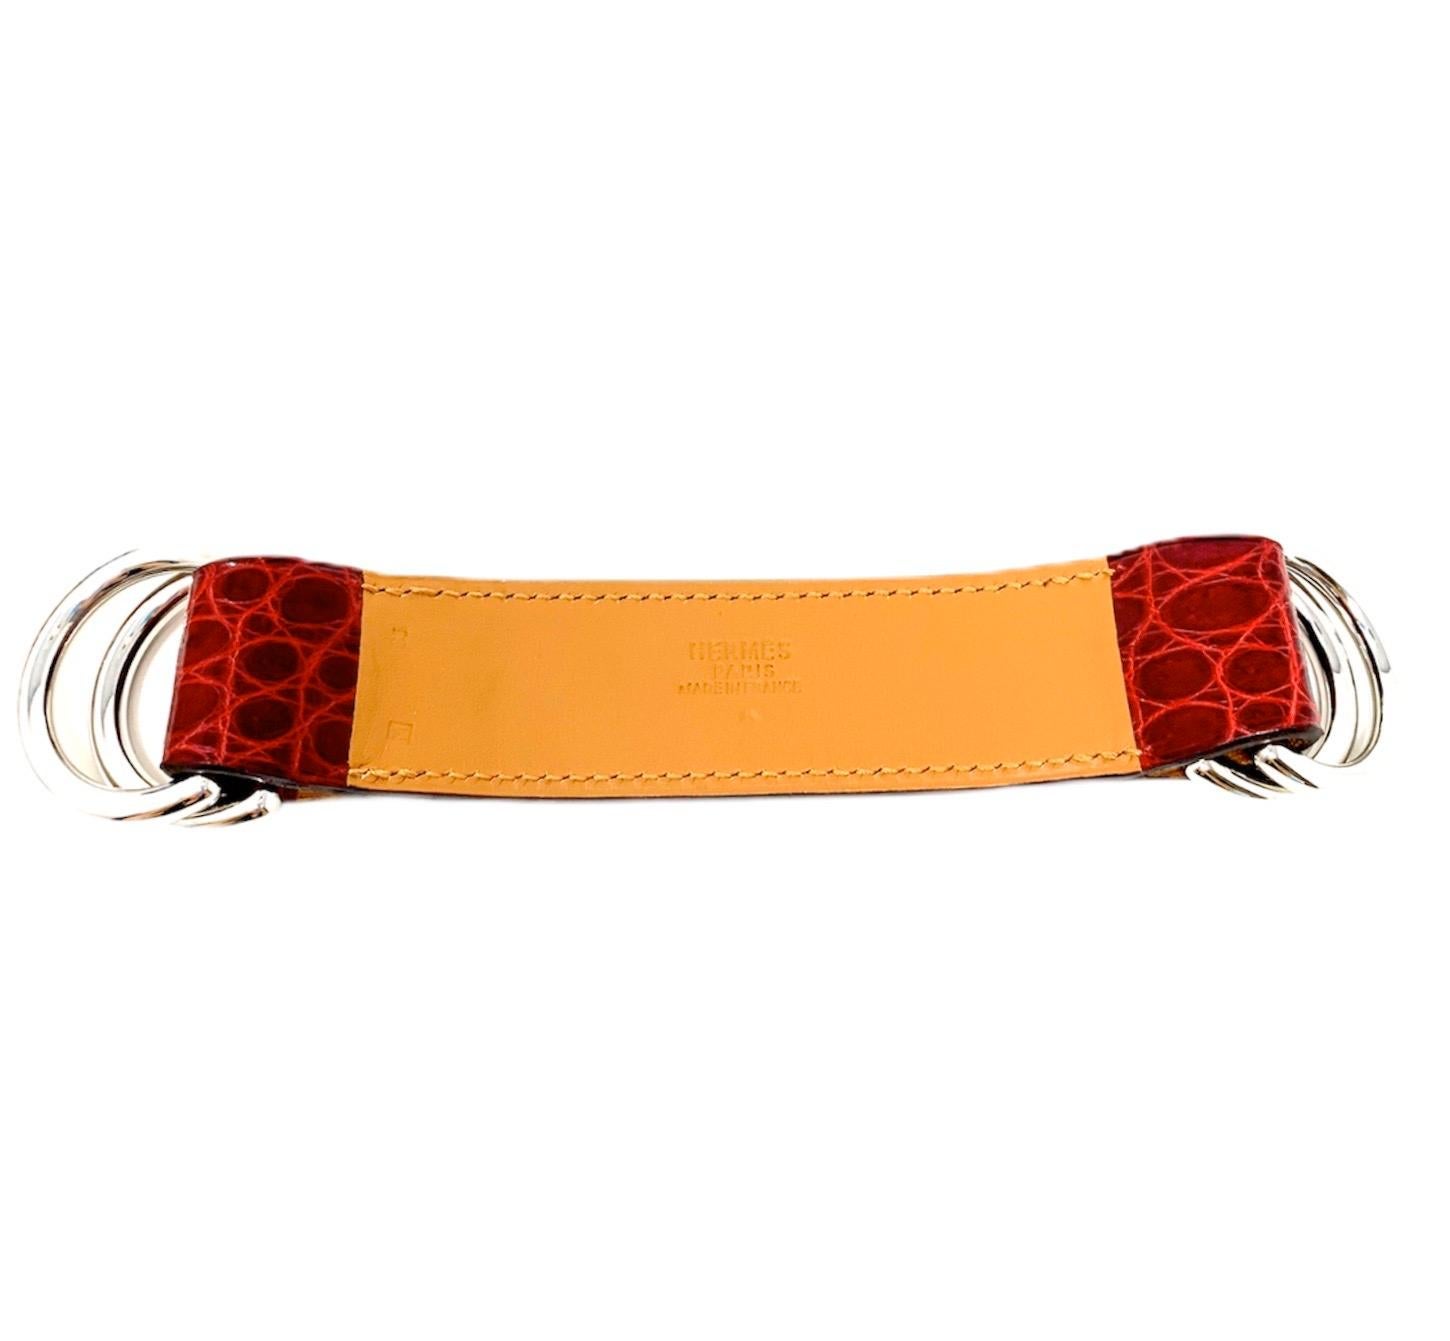 Hermès crocodile Leather Scarf Ring, Bordeaux scarf belt
Perfect Condition
Length 18 Cm
Width 3 cm